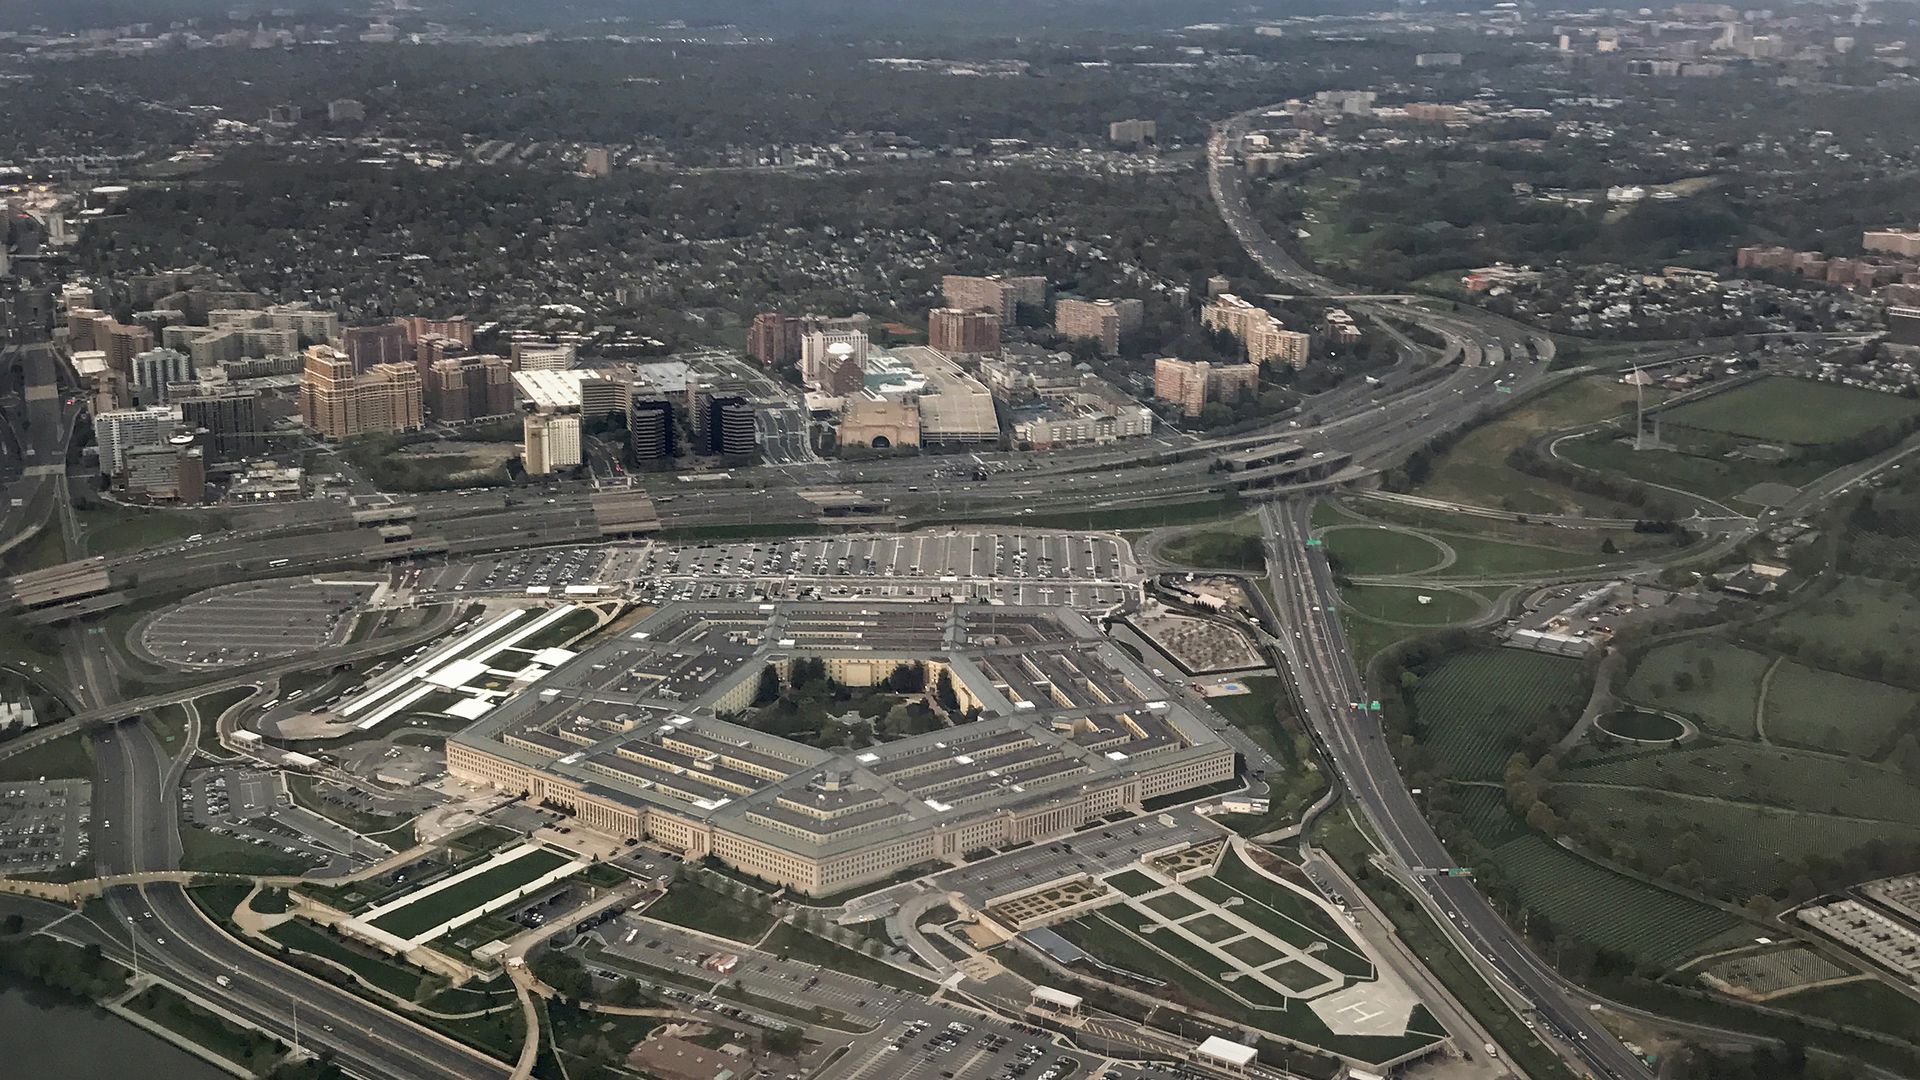 The Pentagon